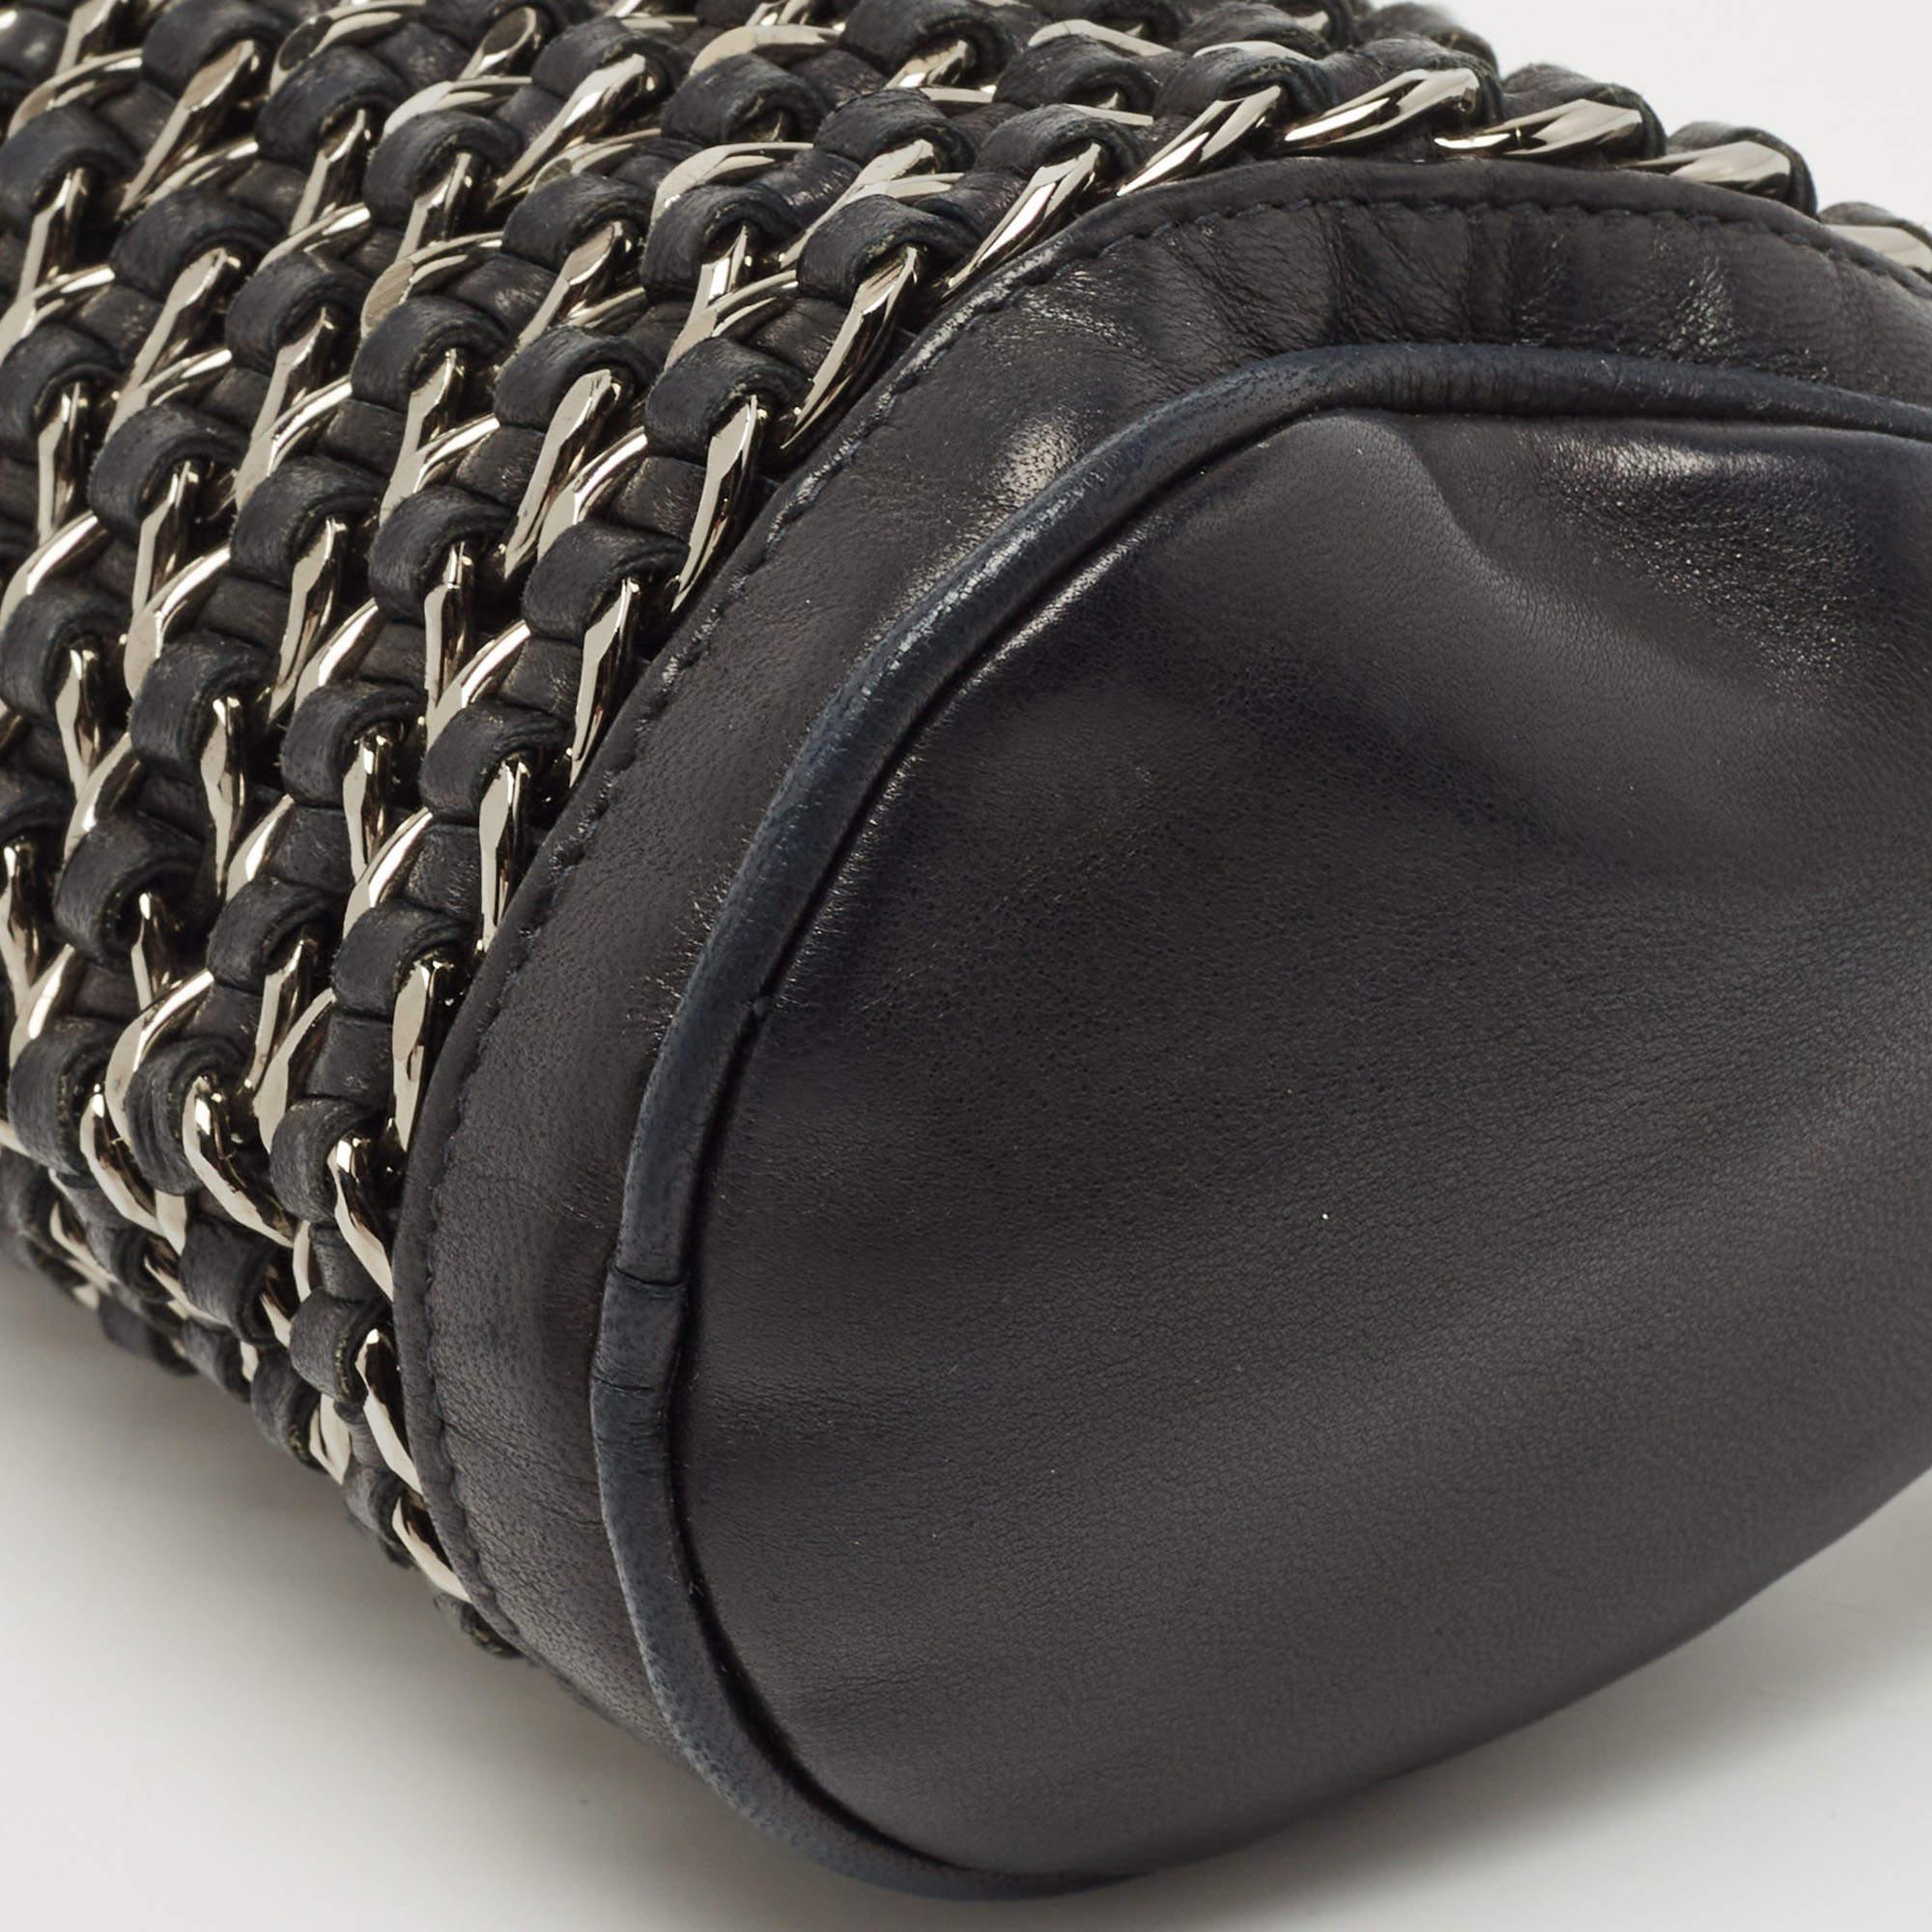 Chanel Black Leather Chain Links Barrel Clutch Bag 5